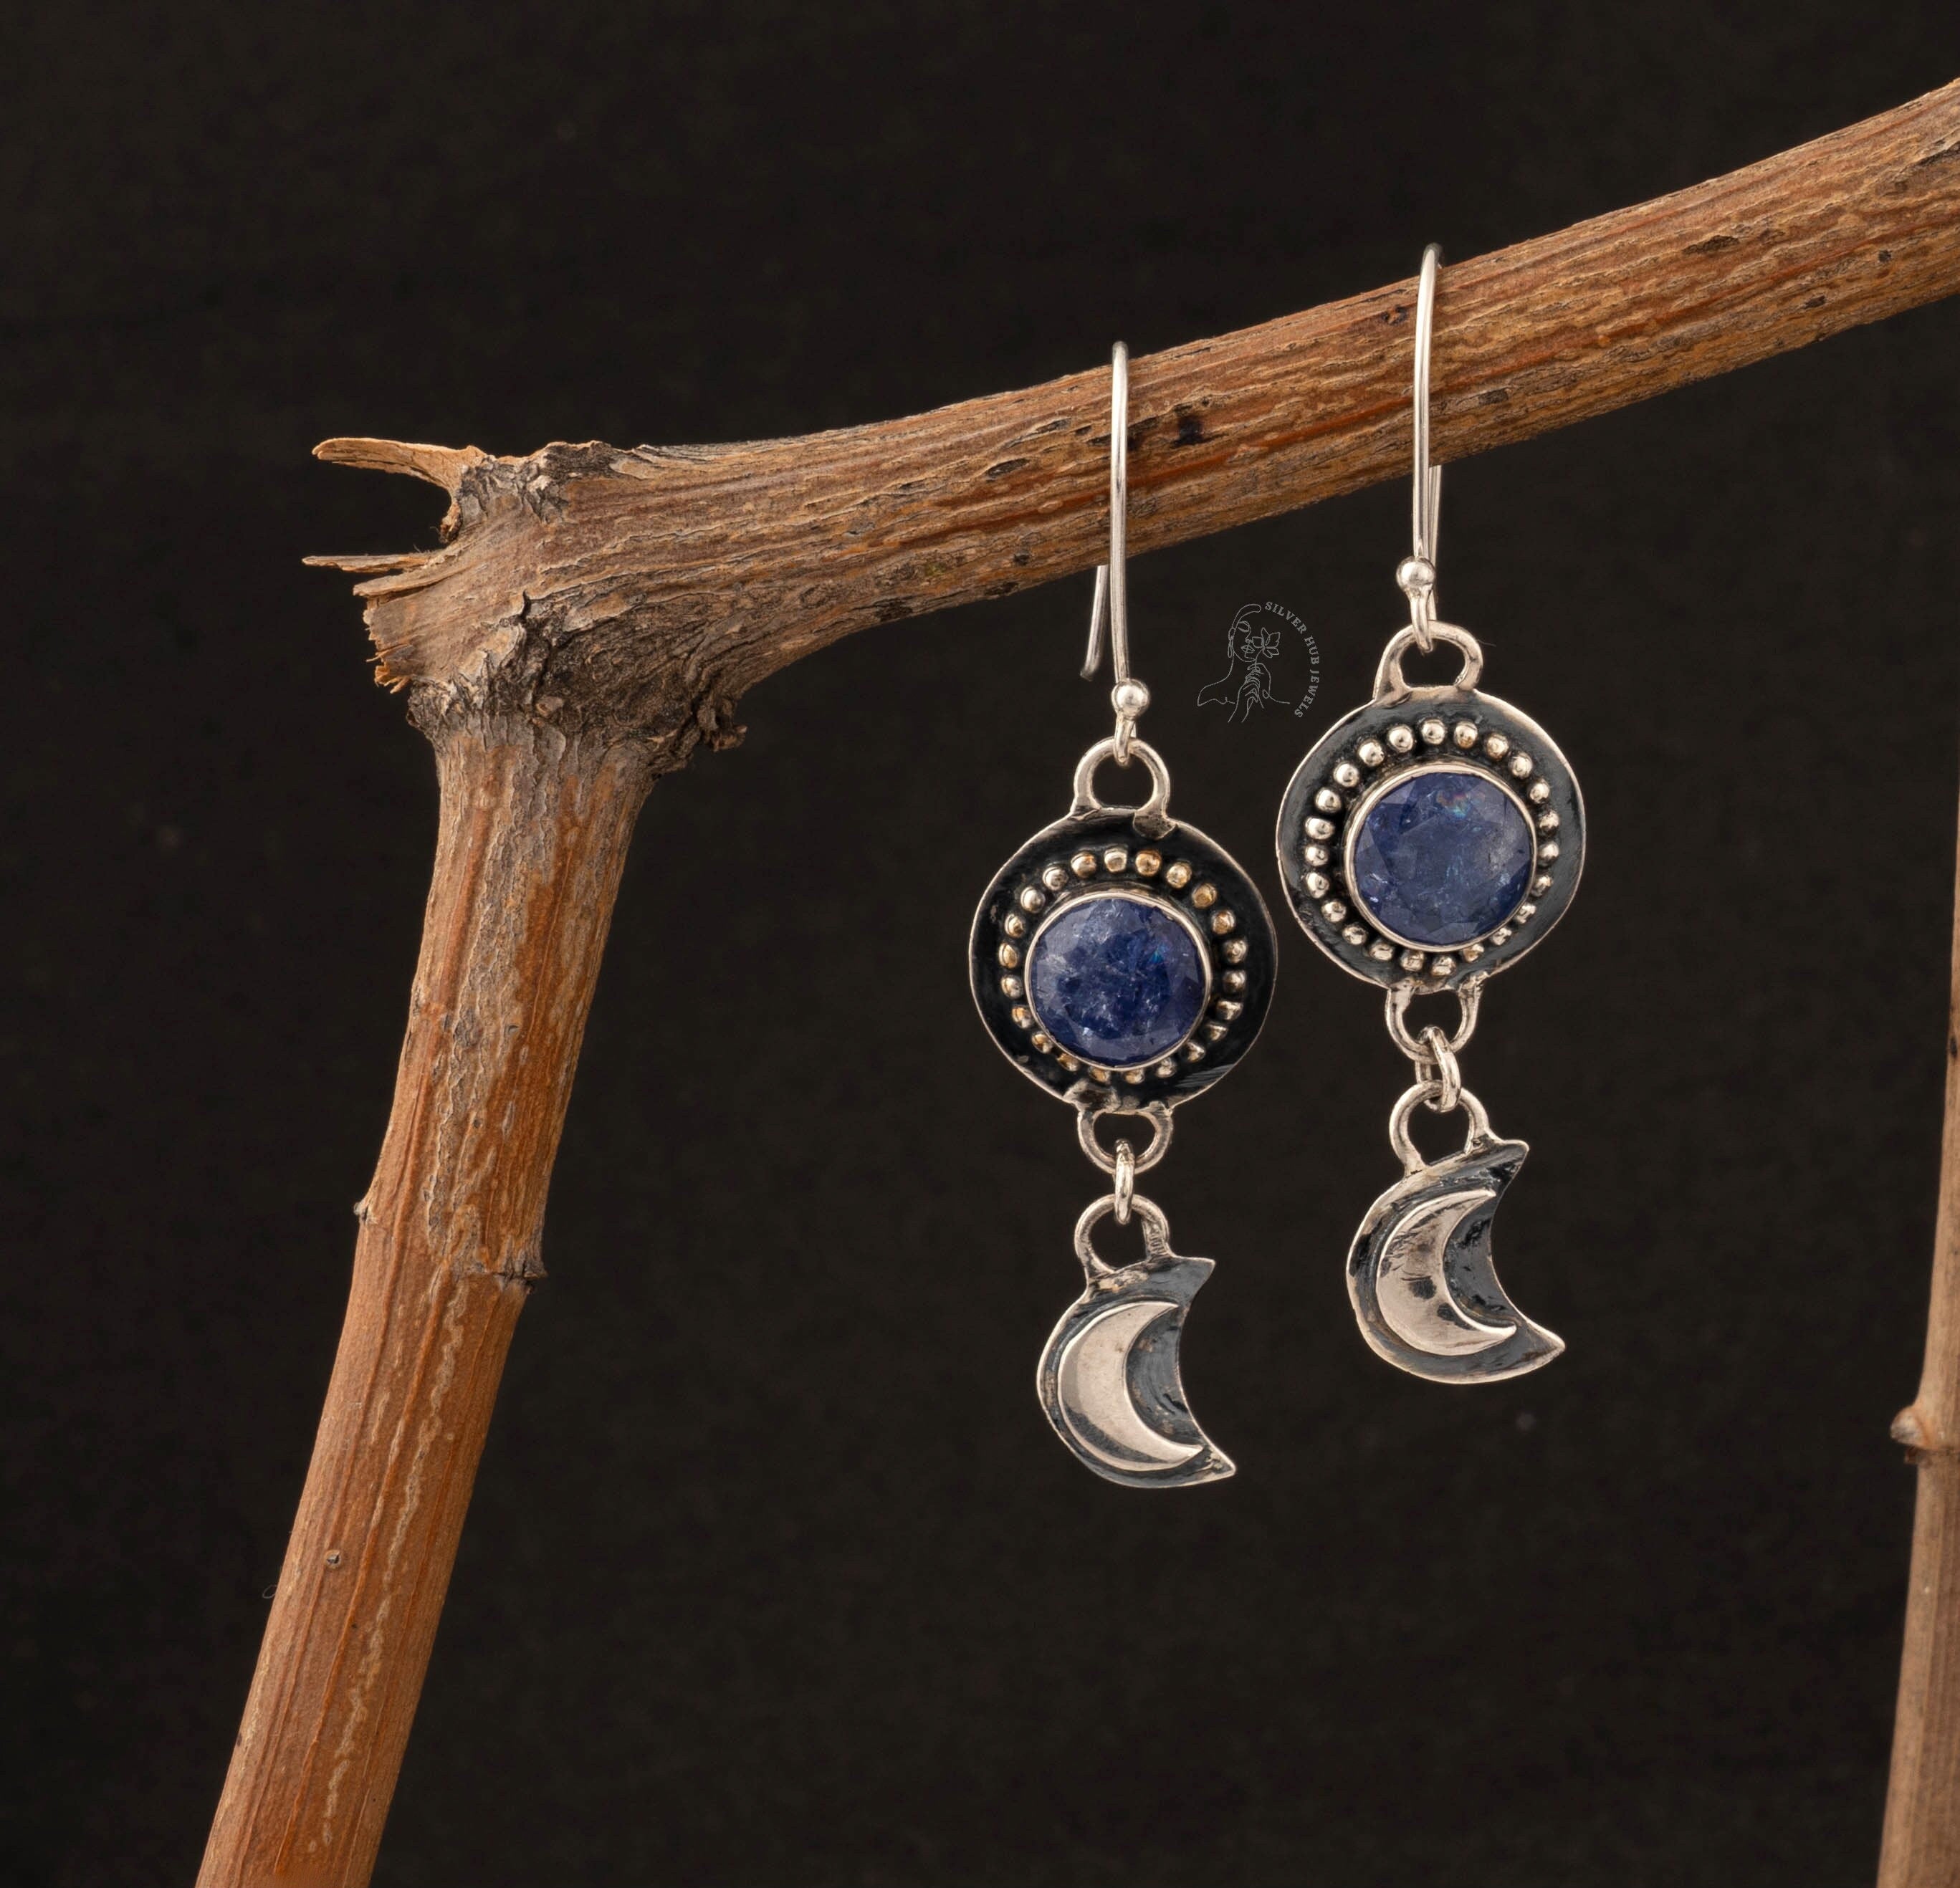 Precious Iolite Earrings, Gemstone Earrings, Blue Drop & Dangle Earrings, 925 Sterling Silver Jewelry, Wedding Gift, Earrings For Sister